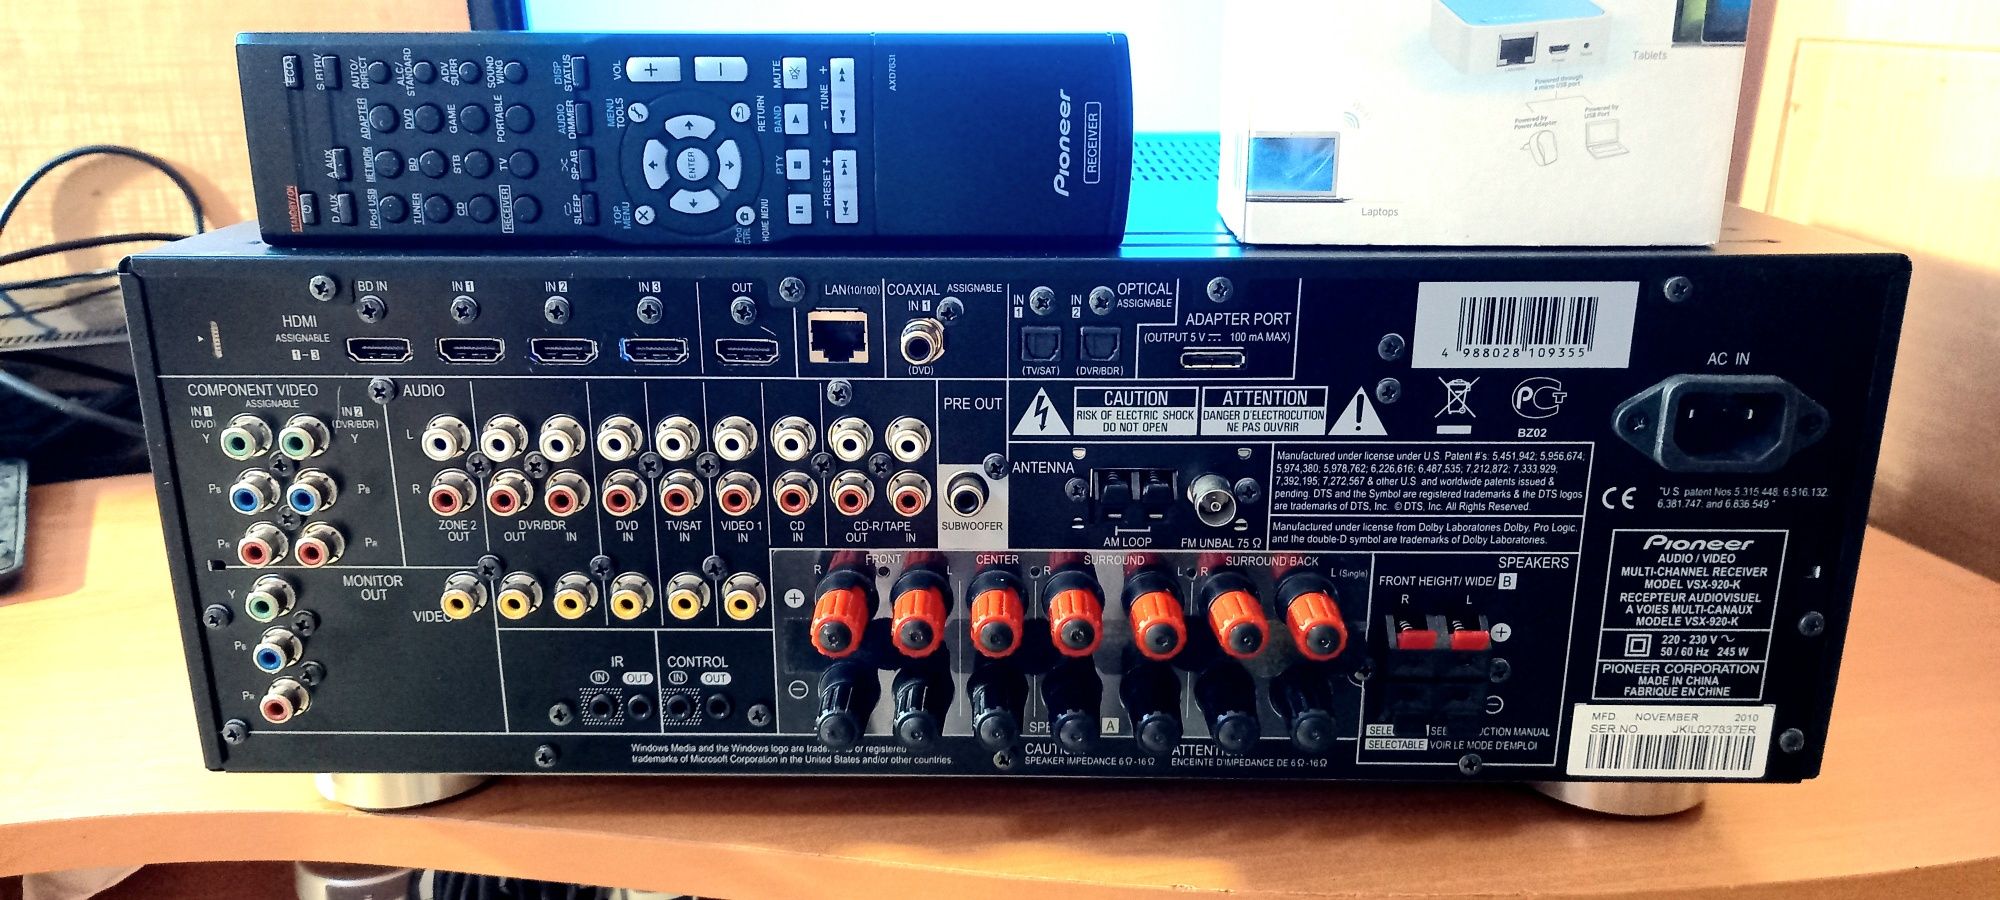 Pioneer VSX-920 7.1×140w HDMI/USB/MCACC/NetRadio/vTuner/dlna/6-16om